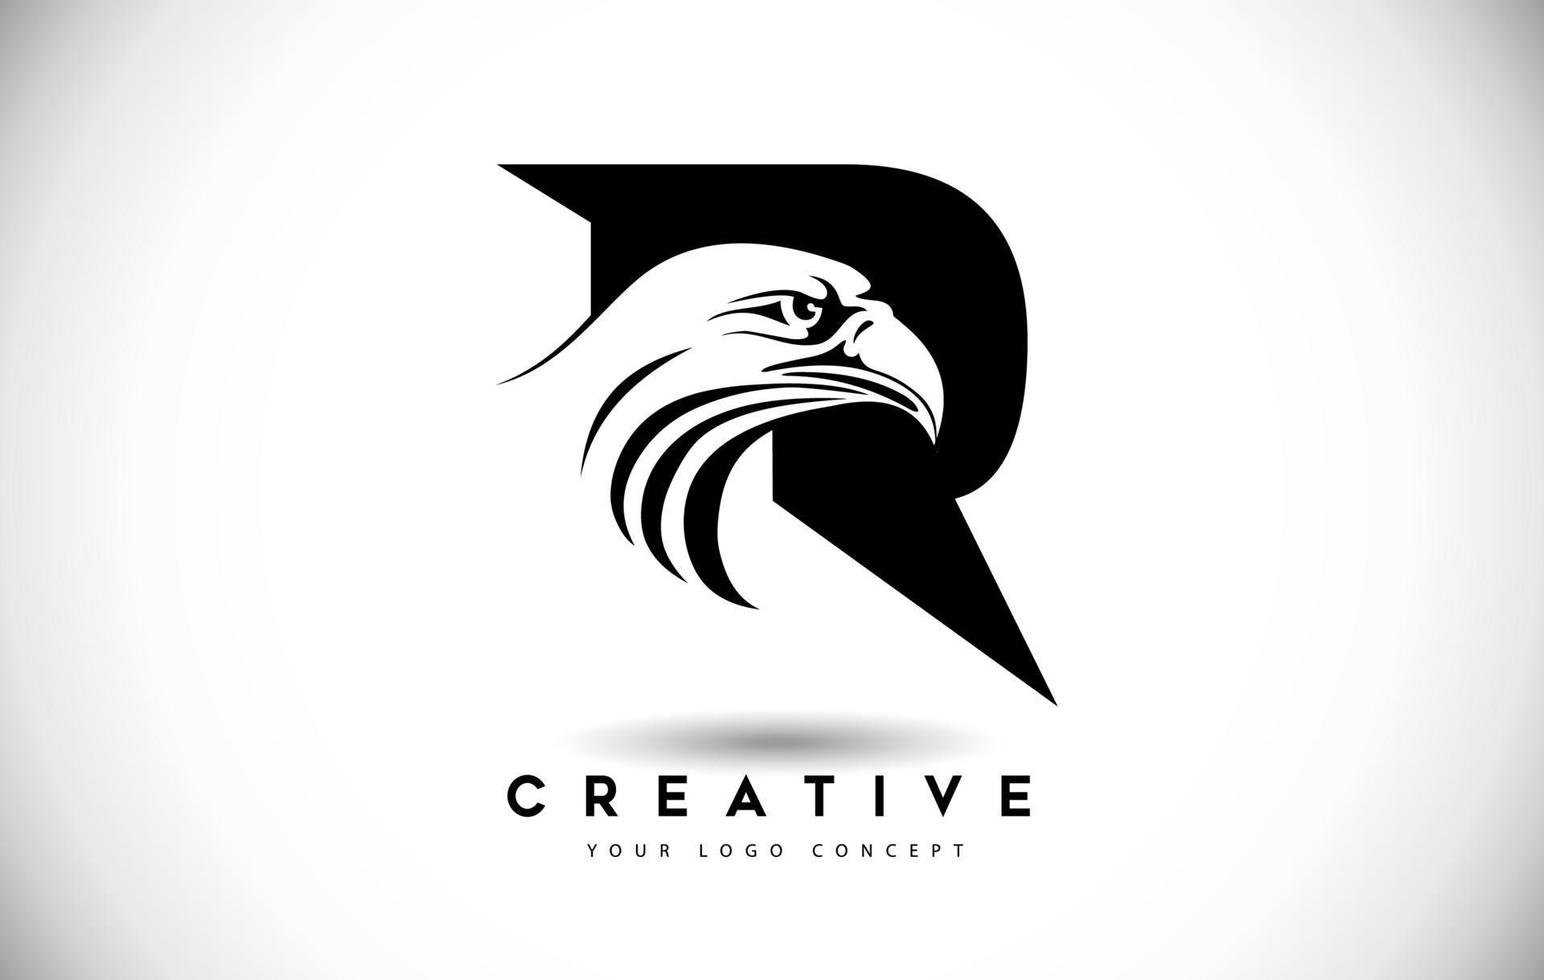 Logotipo de letra r águila con ilustración de vector de cabeza de águila creativa.